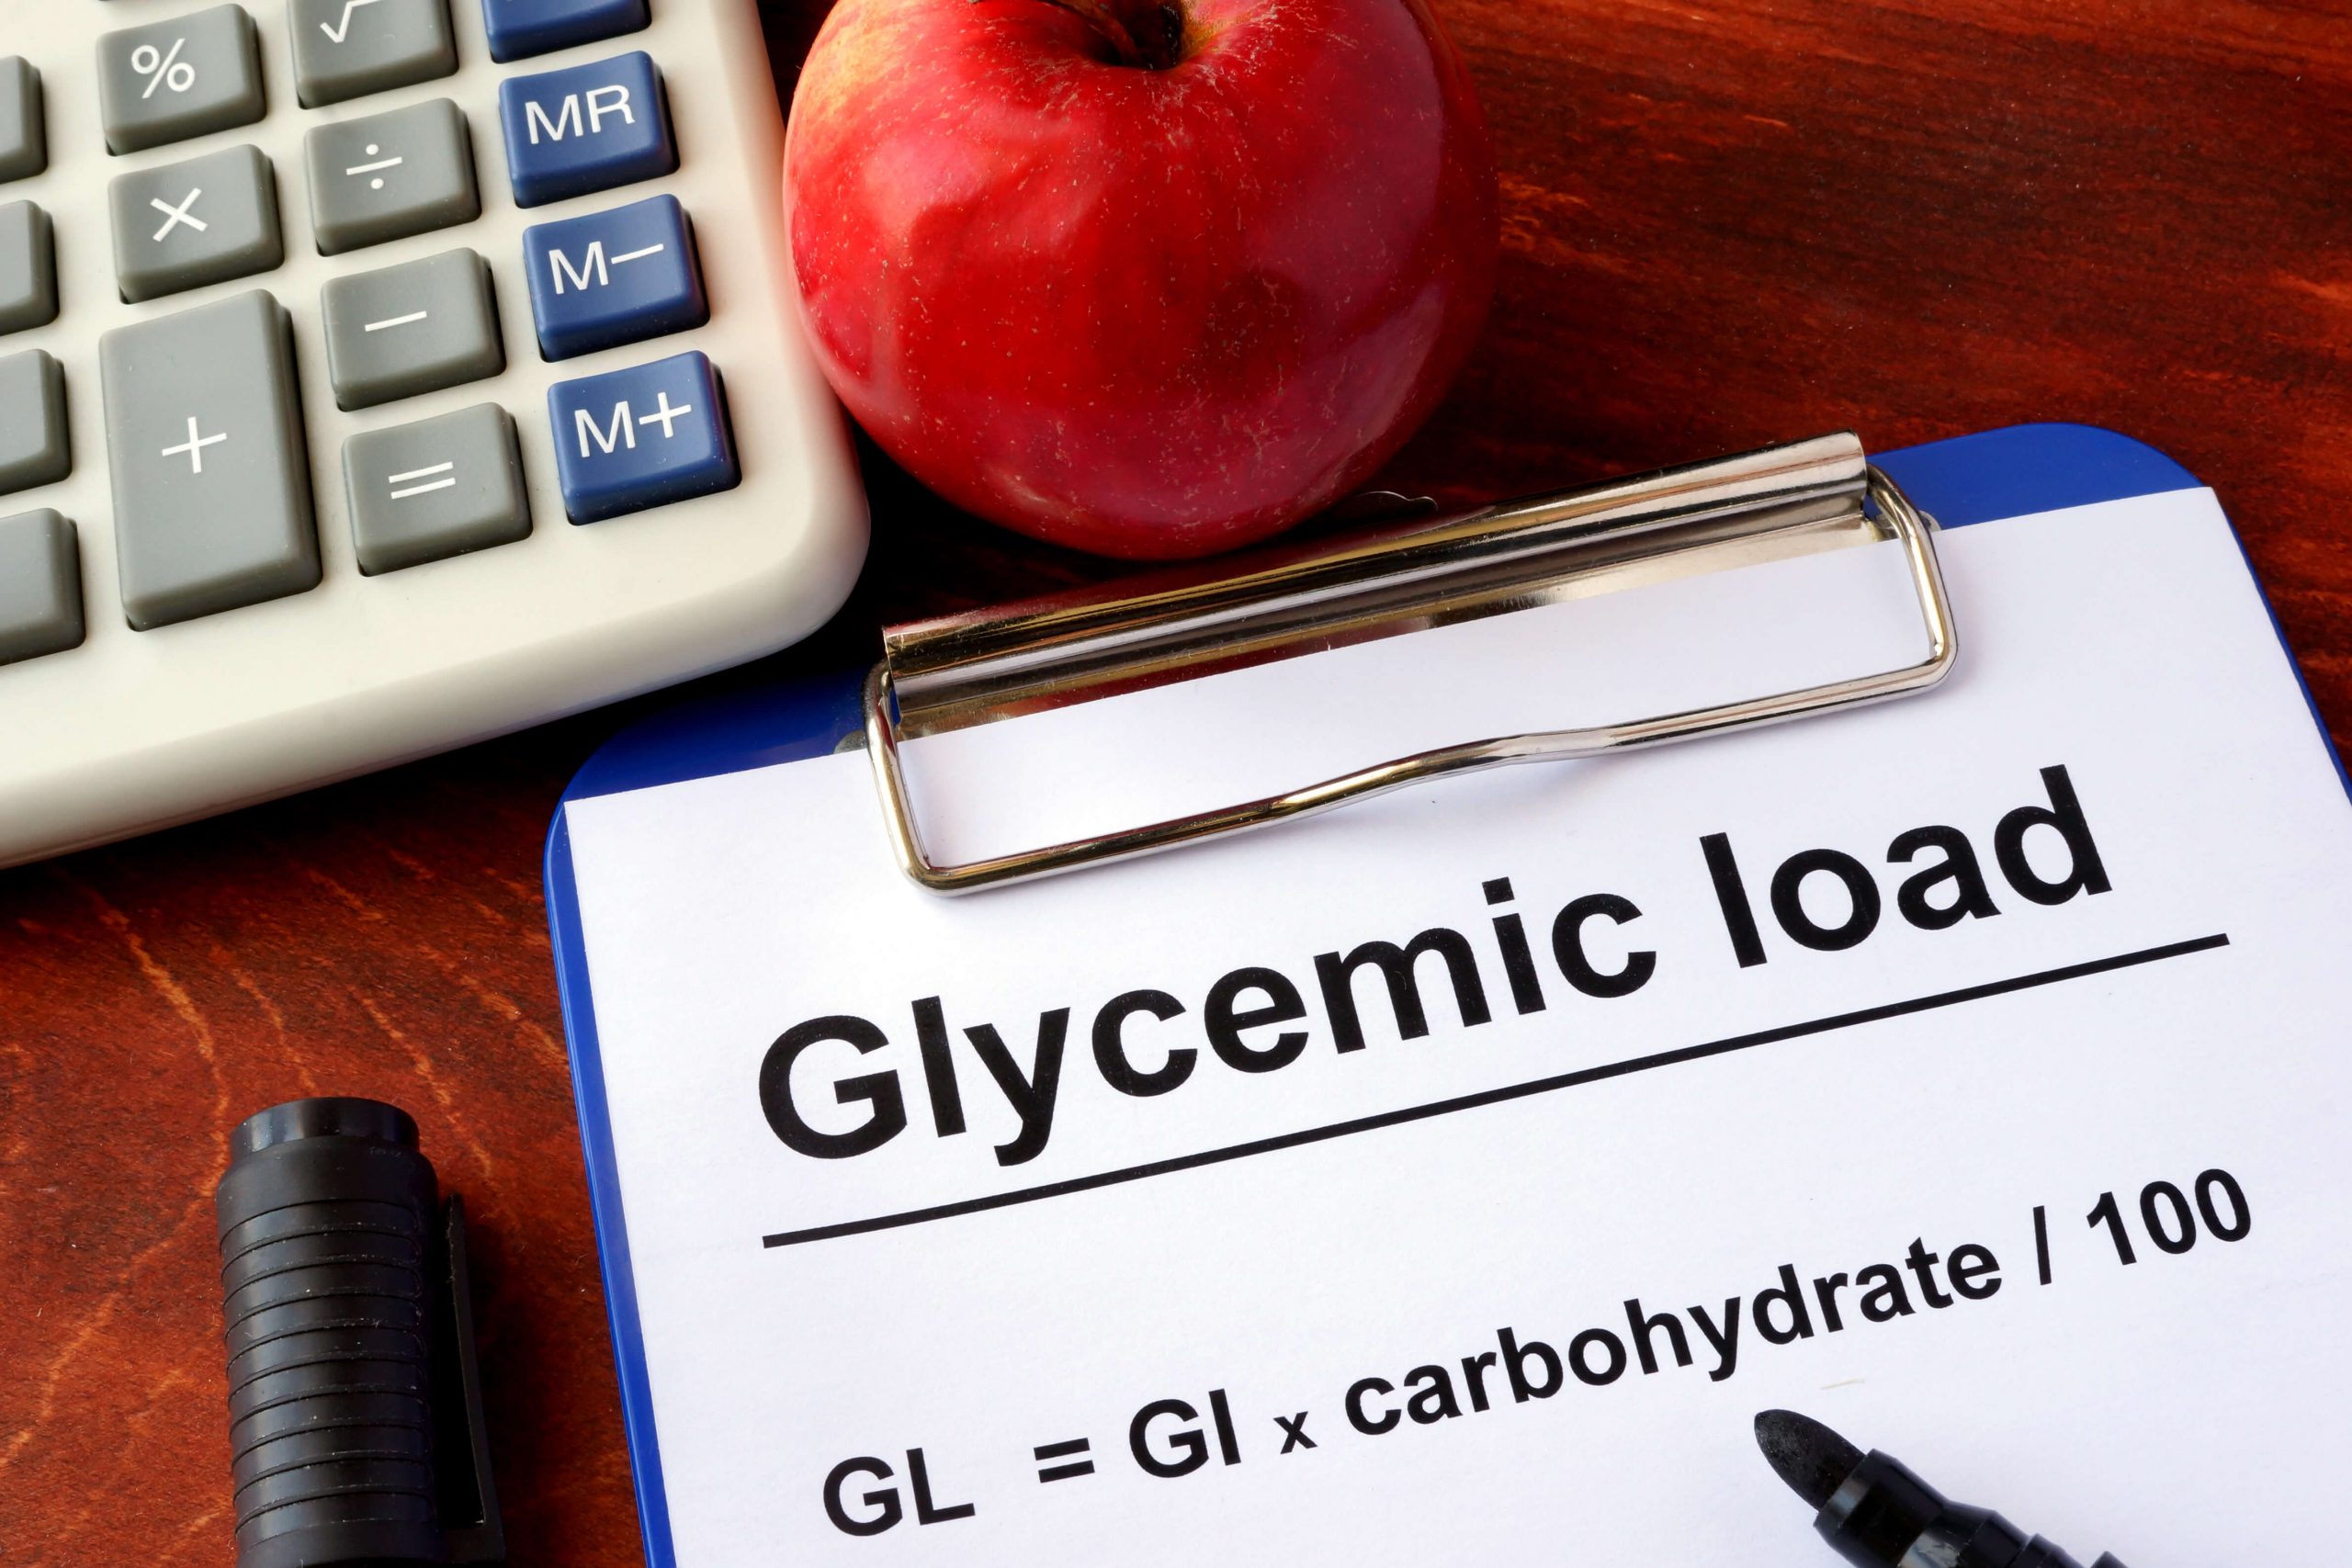 Indicele si incarcatura glicemica – instrumente utile in managementul greutatii